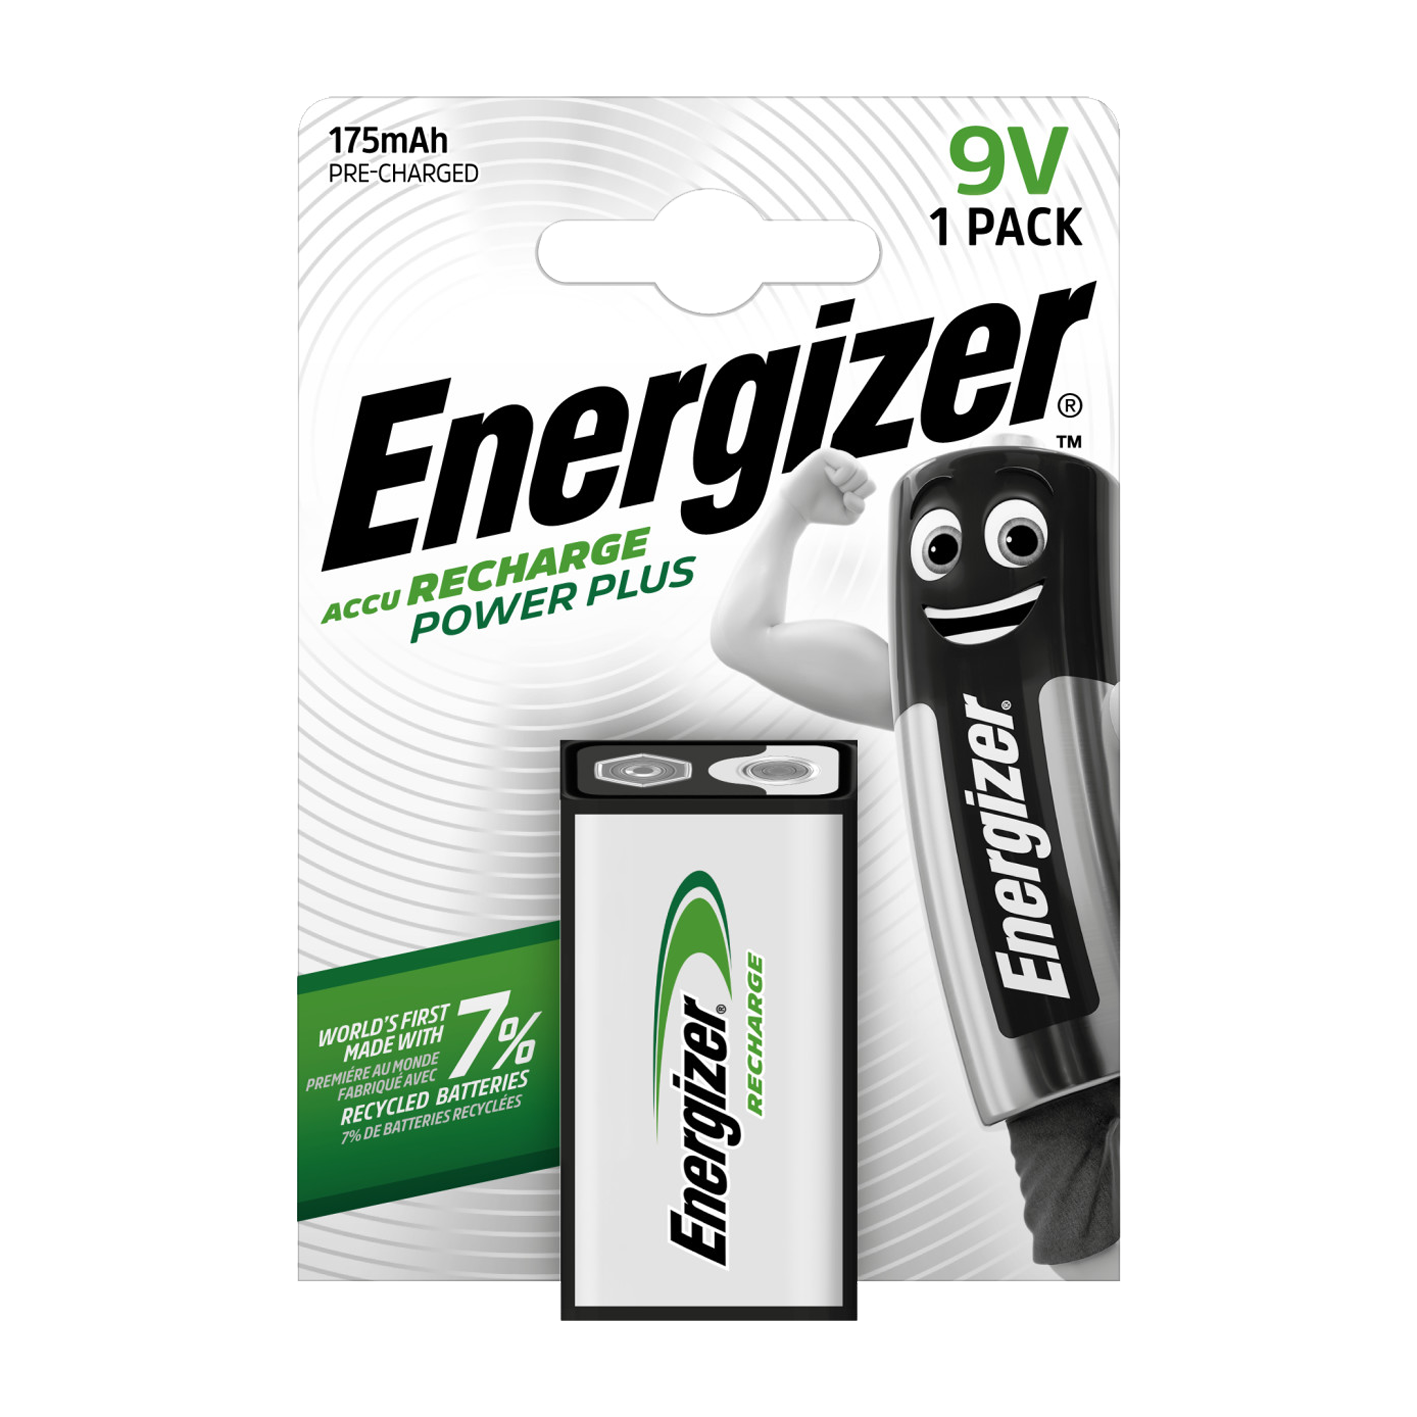 Energizer® 9V 175mAh Recharge Power Plus, 1er-Pack